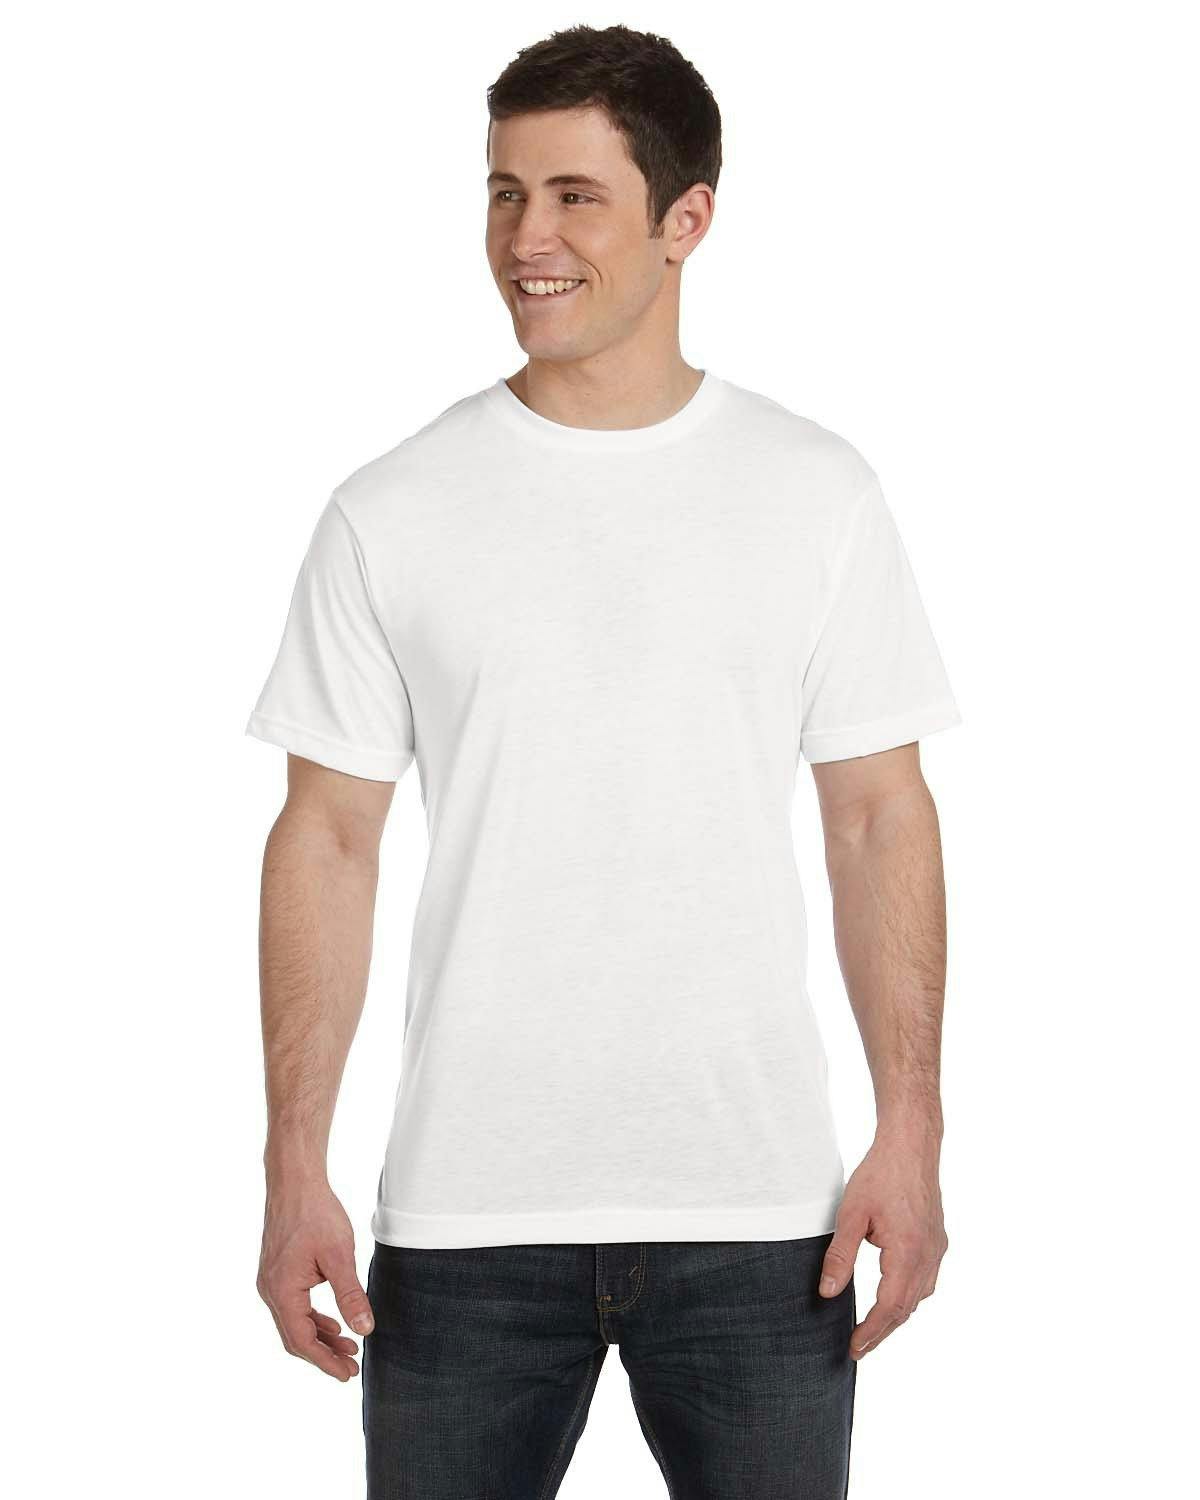 Image for Men's Sublimation T-Shirt